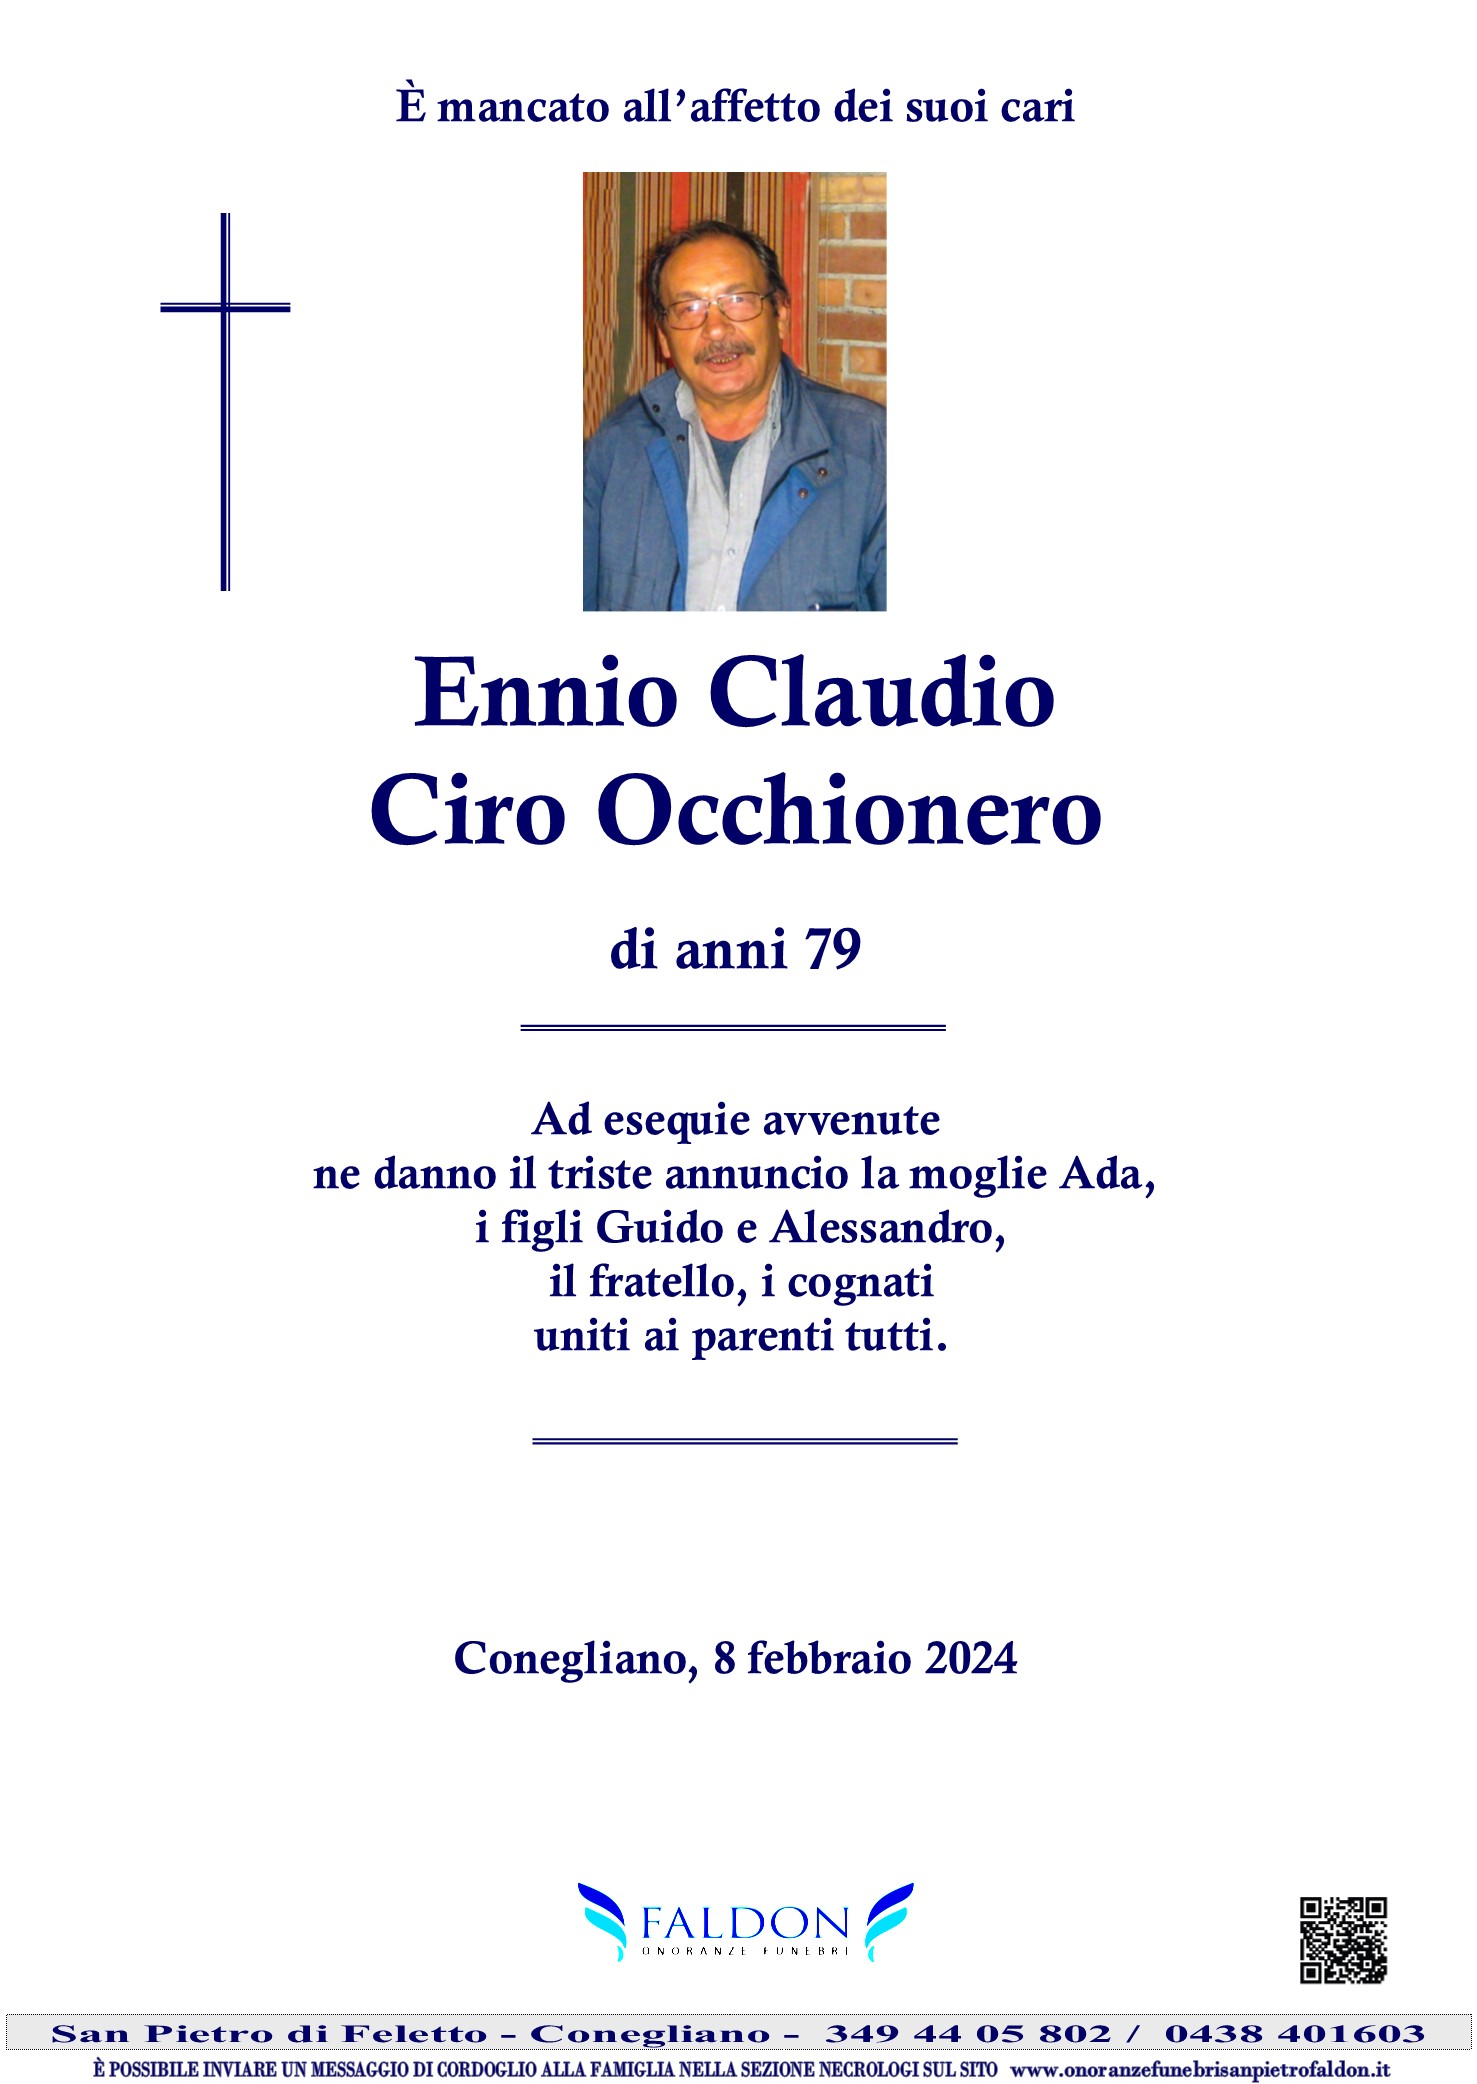 Ennio Claudio Ciro Occhionero